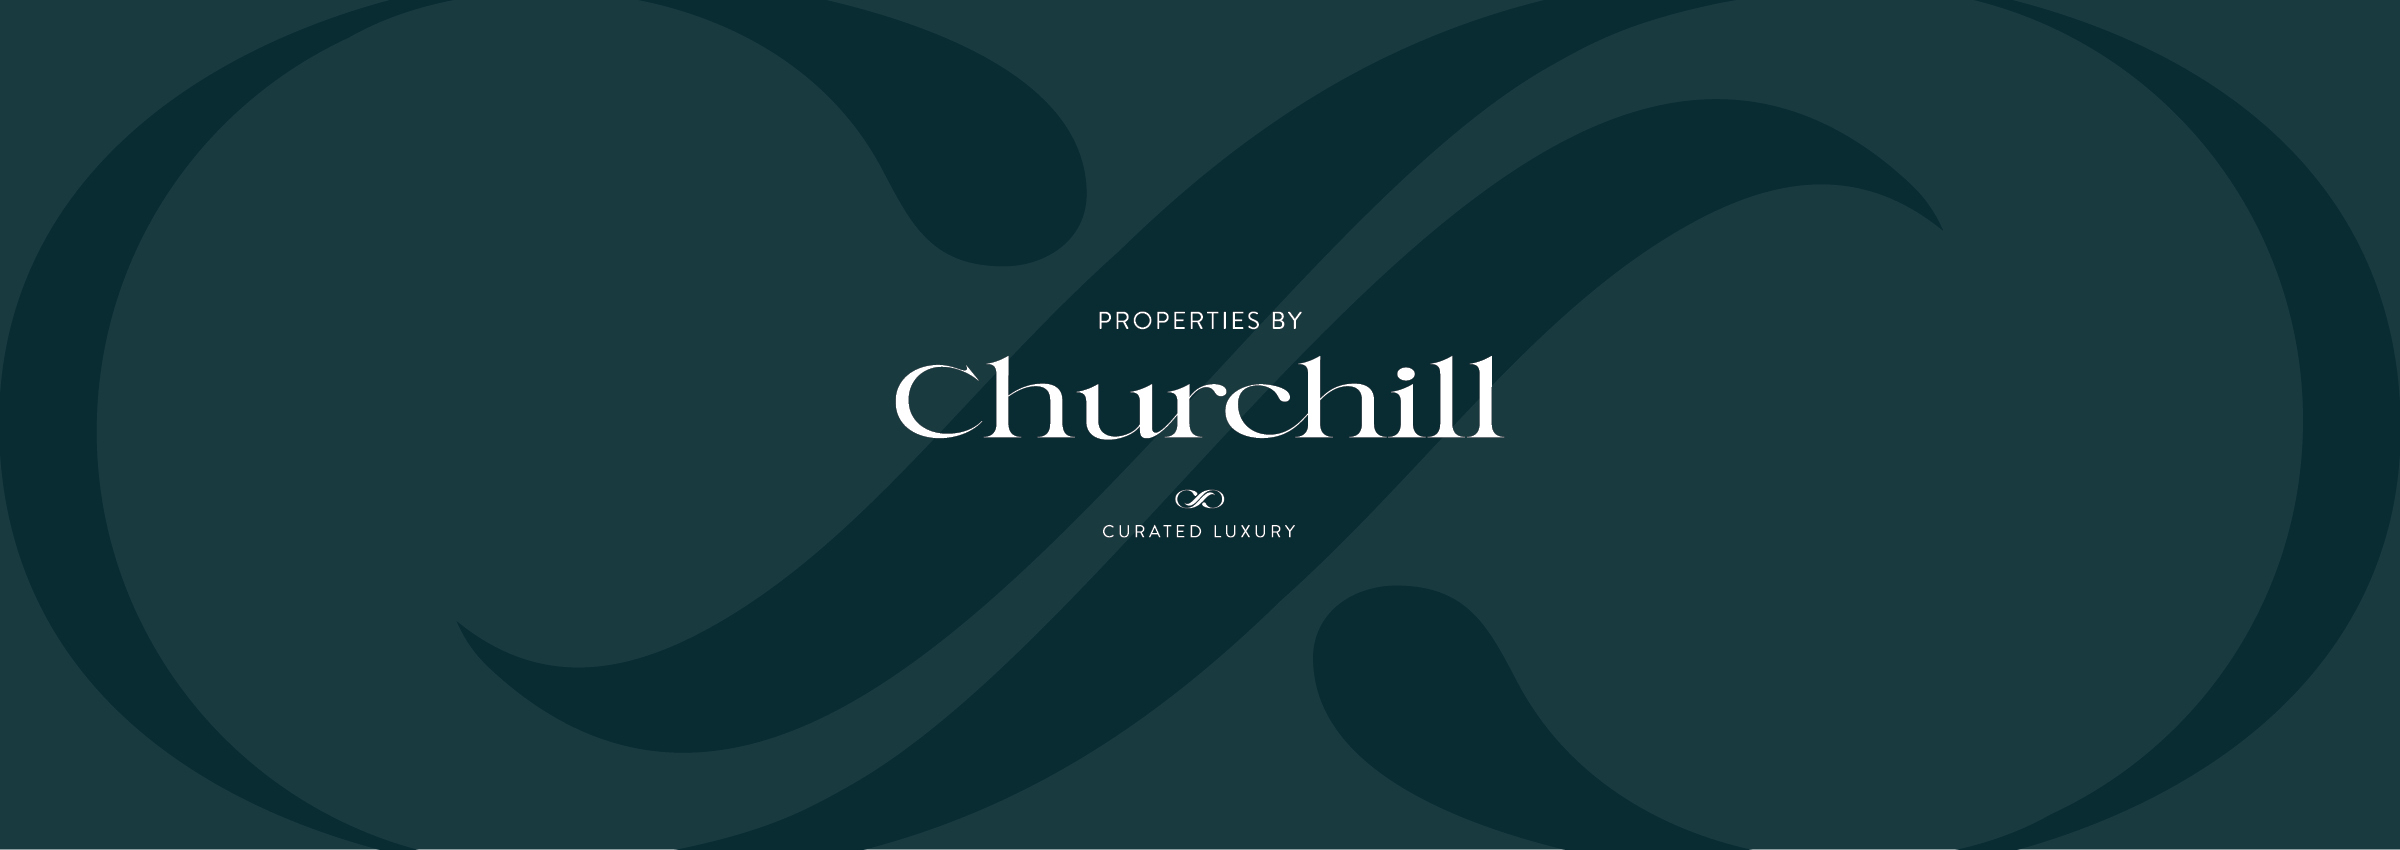 Properties by Churchill